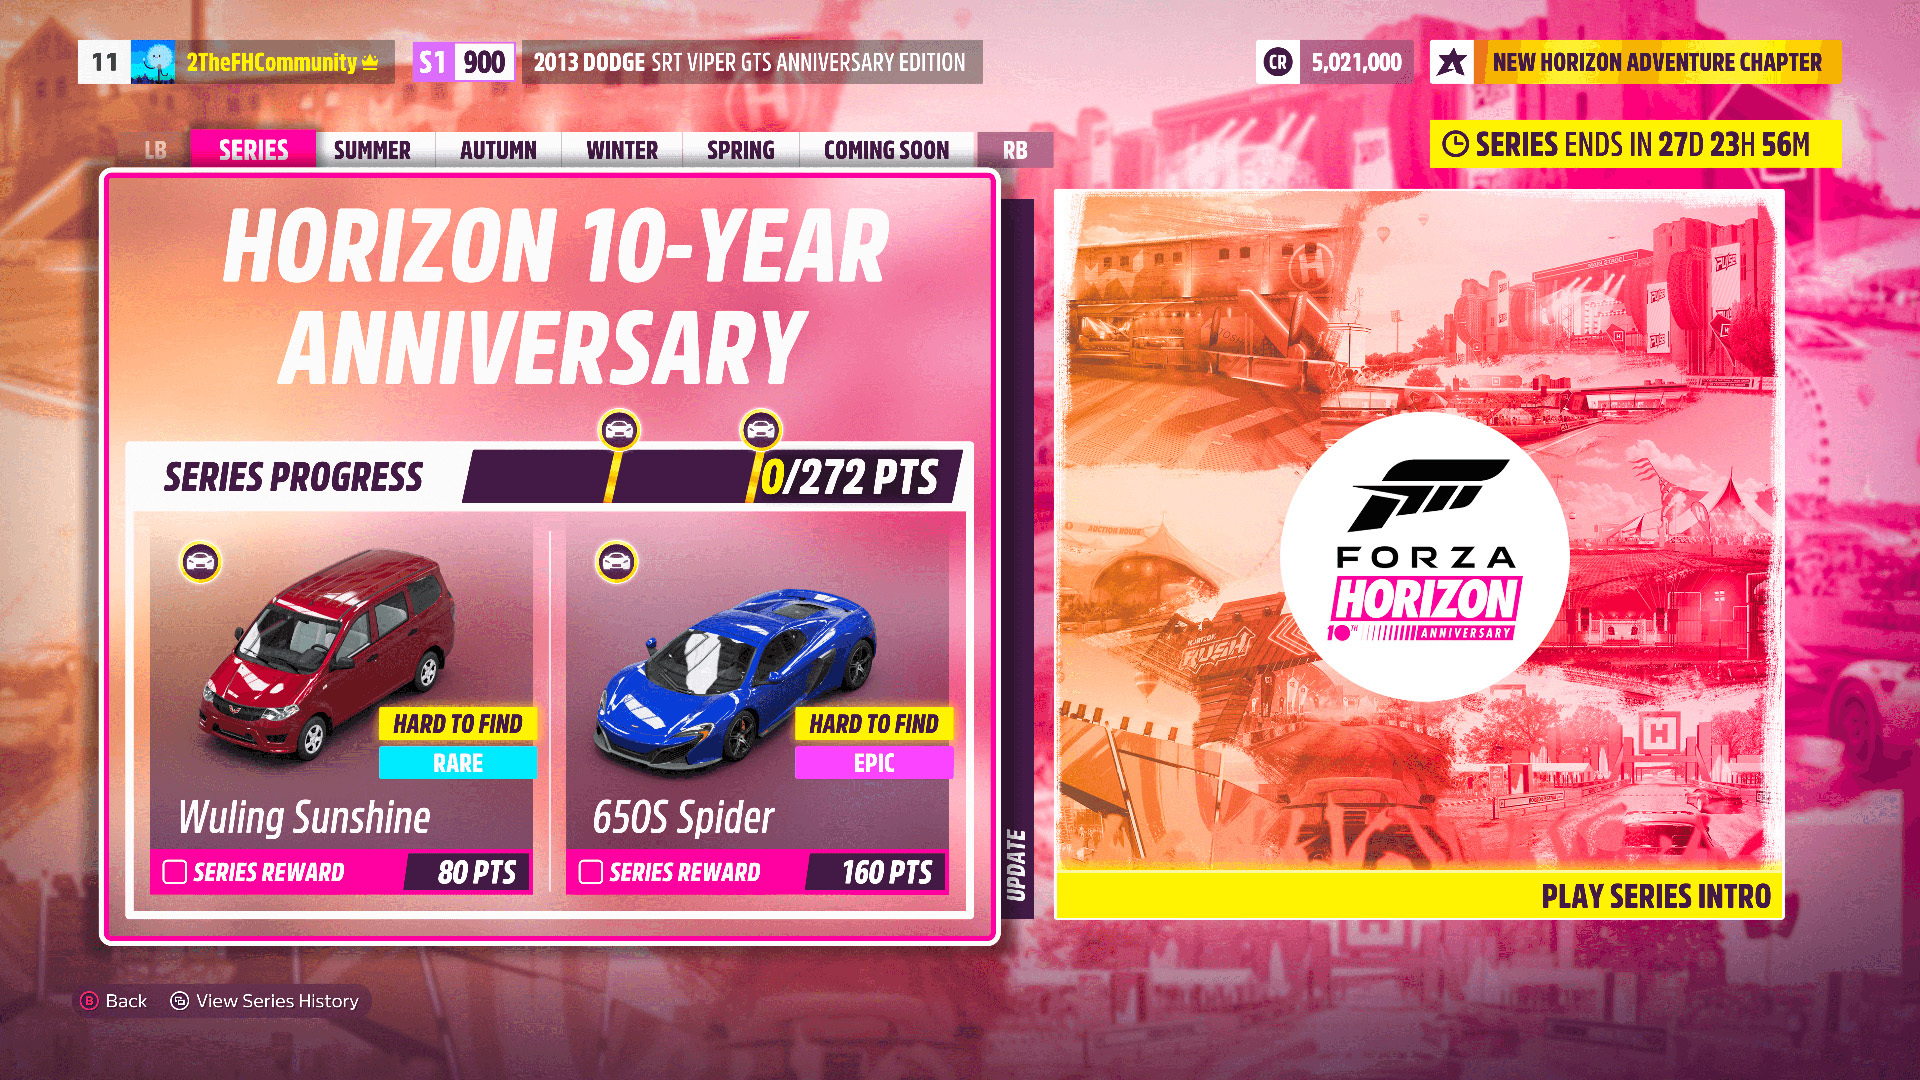 Forza Horizon 5 Japanese Automotive Summer: Festival Playlist